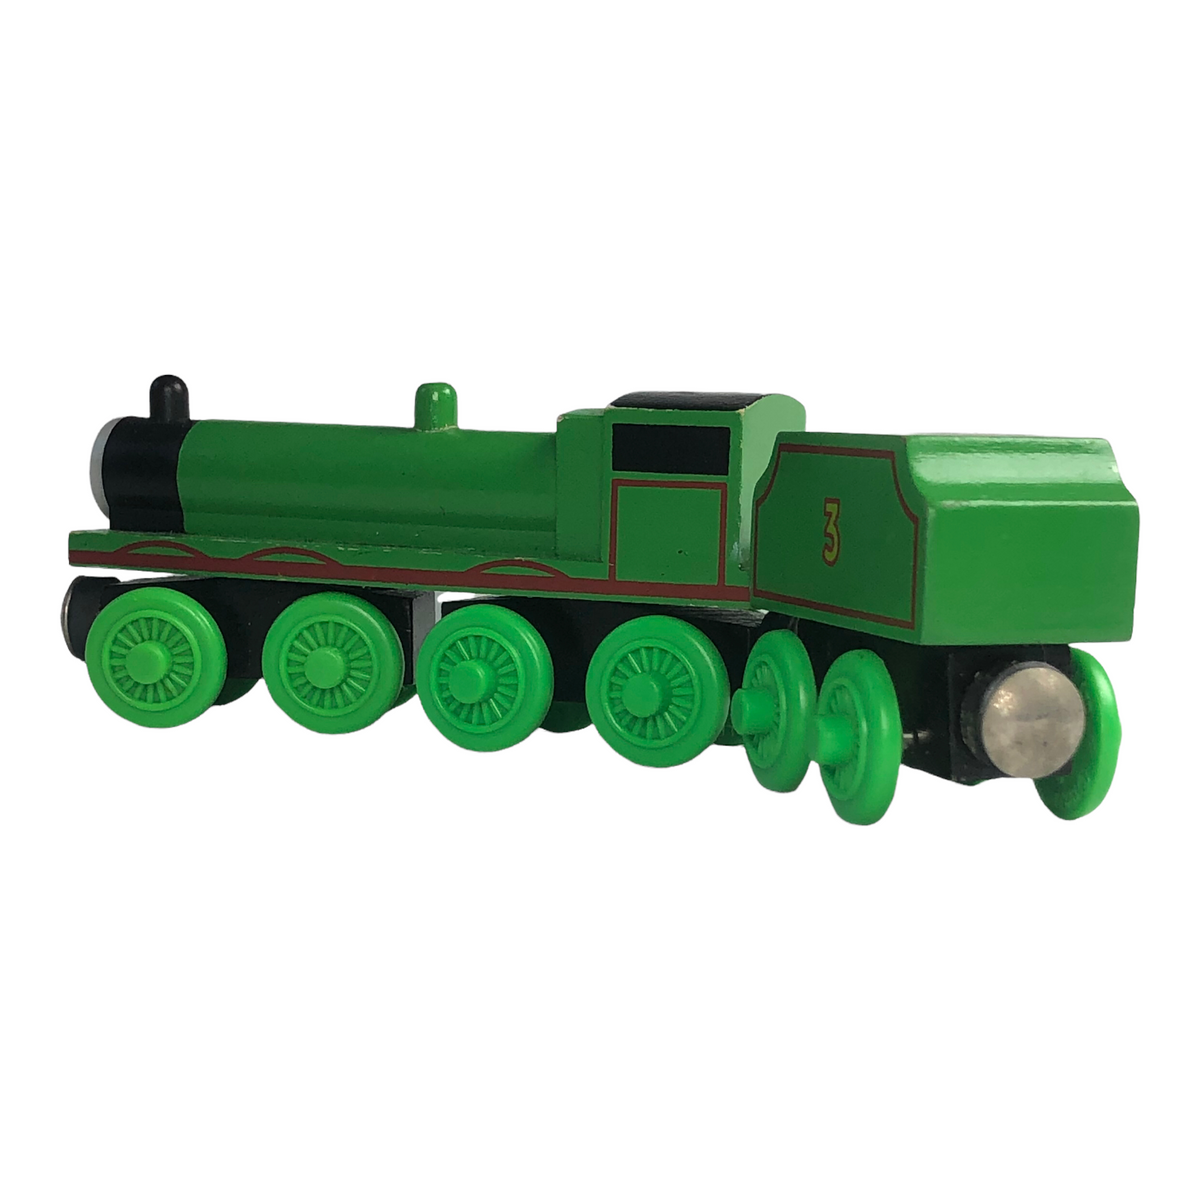 Wooden Railway Sad Henry